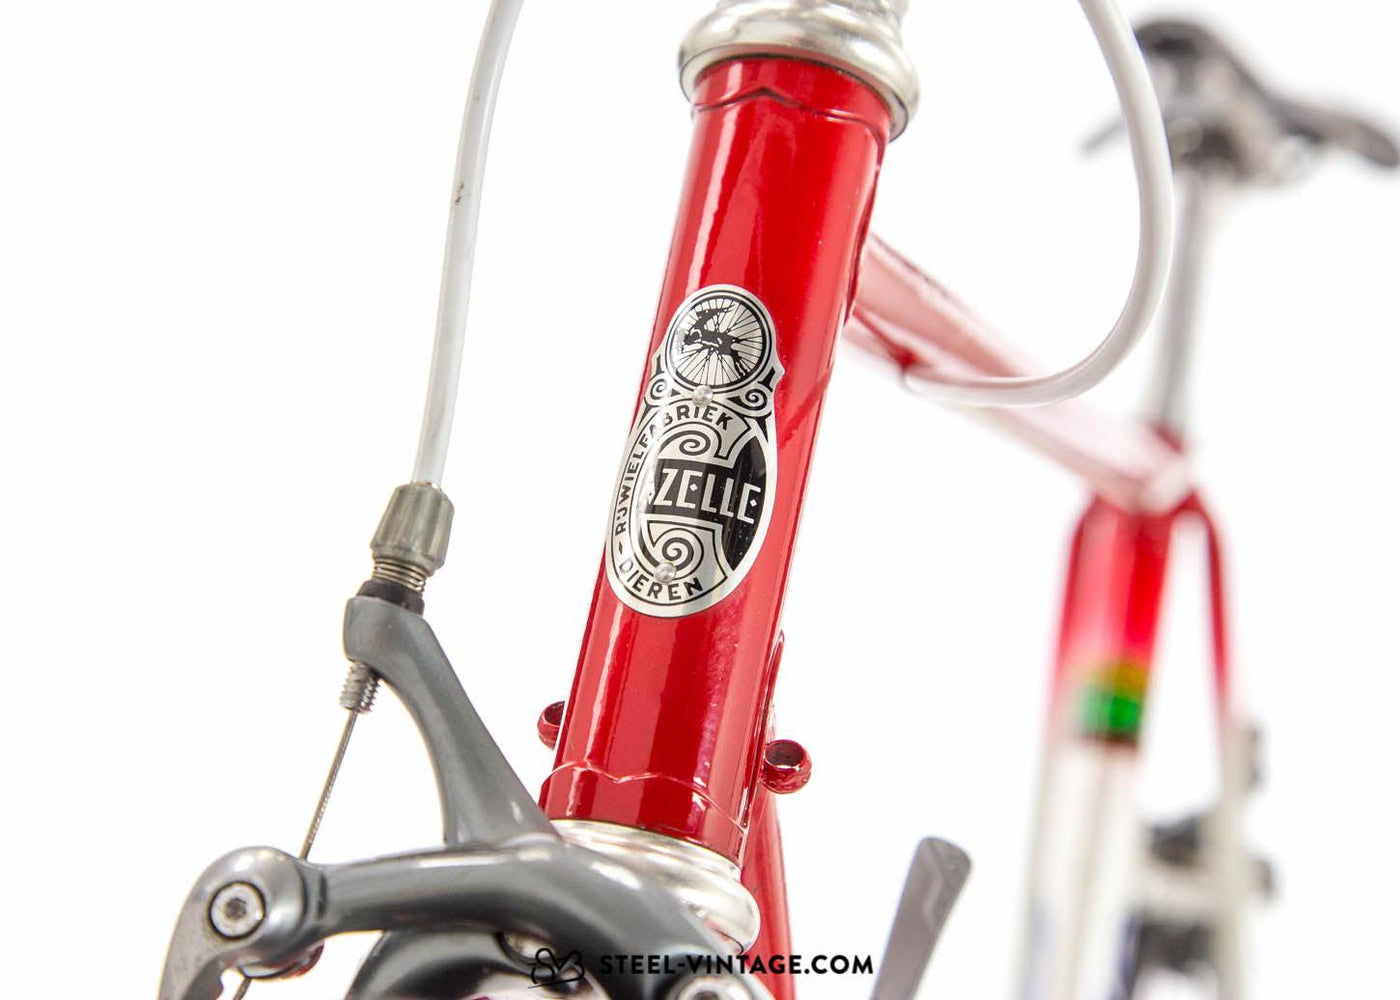 Gazelle Champion Mondial Classic Road Bike 1987 - Steel Vintage Bikes